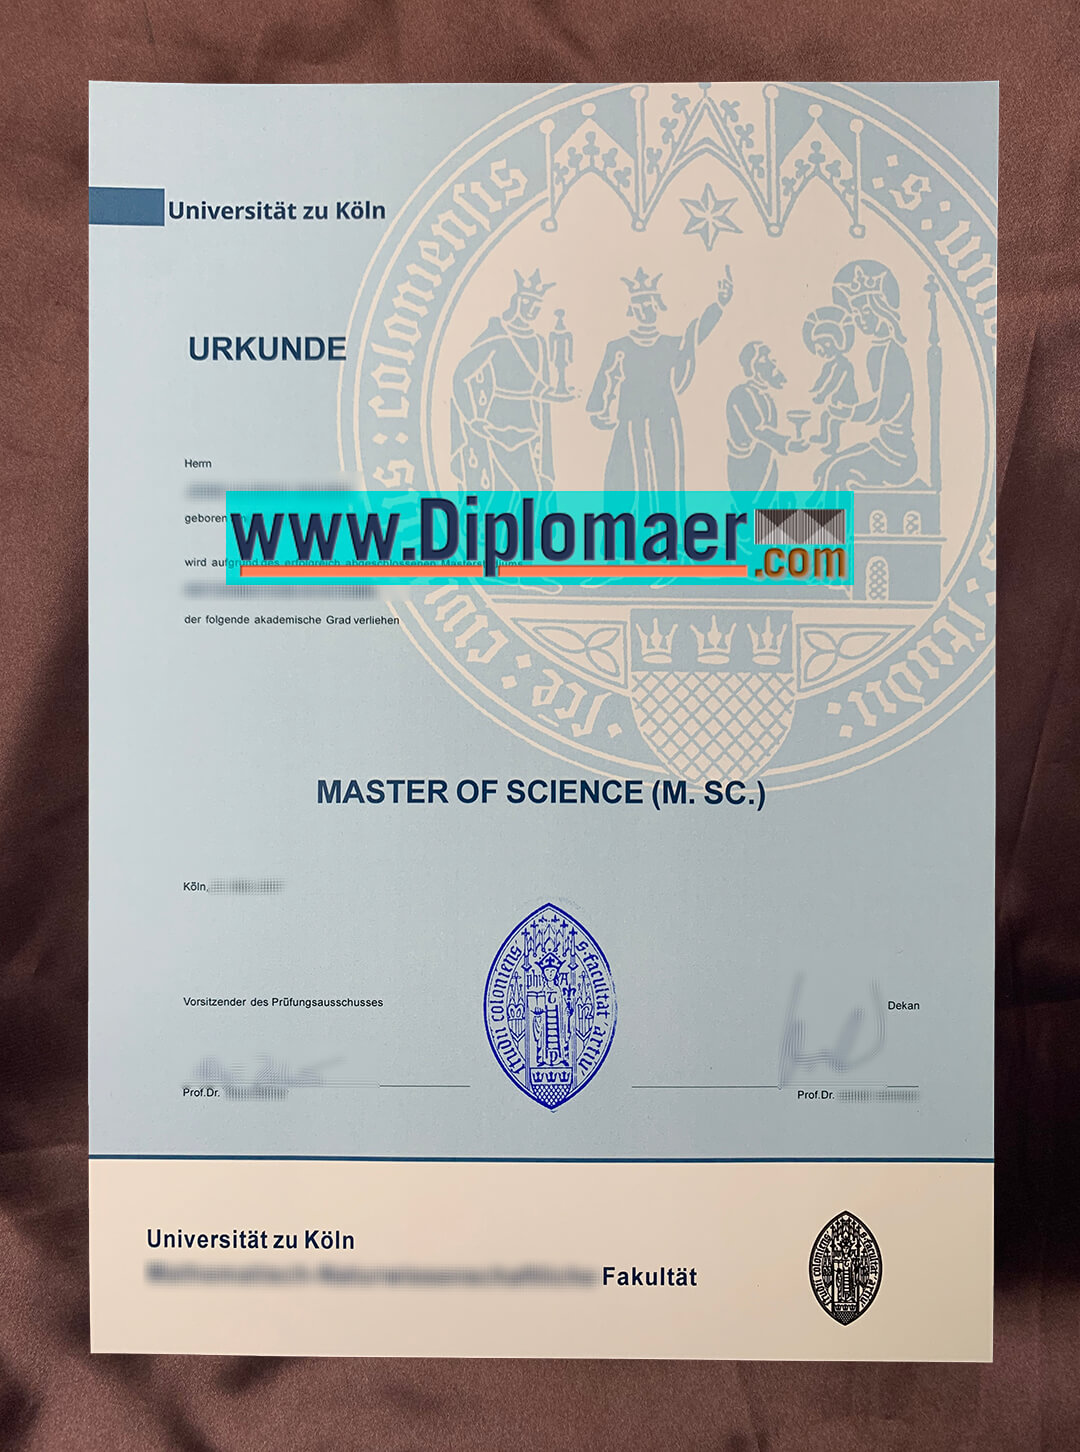 Universitat zu Koln Fake Diploma - What is the cost of a fake Universität zu Köln degree certificate?